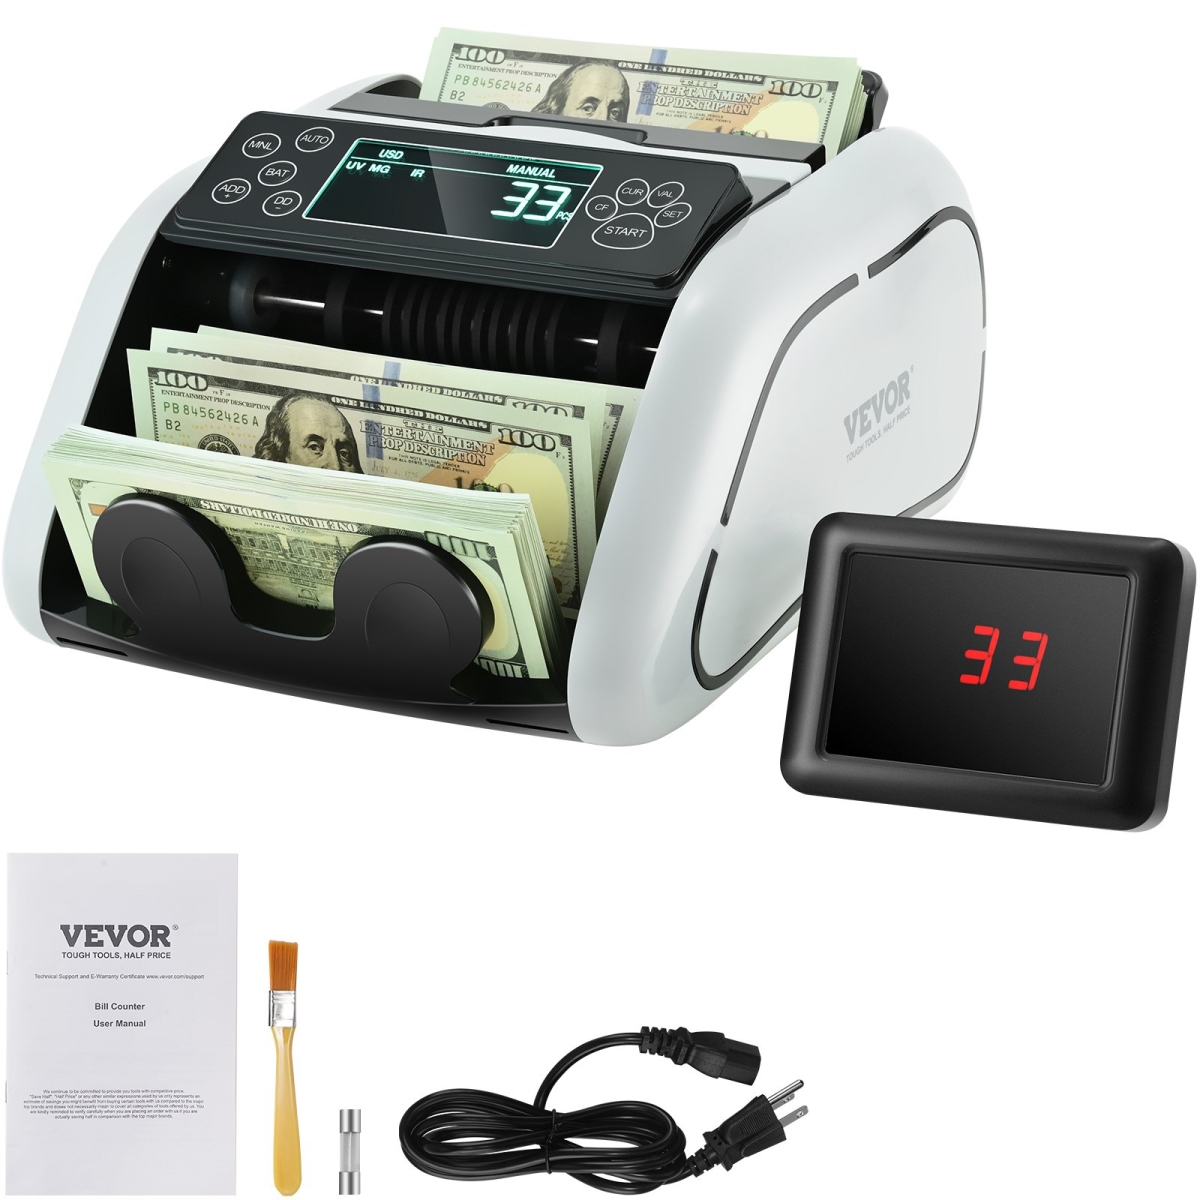 Picture of Vevor DCJH1UVMGIRDDFUJ5V1 Money Counter Machine Bill Counter with UV MG IR DD Counterfeit Detection